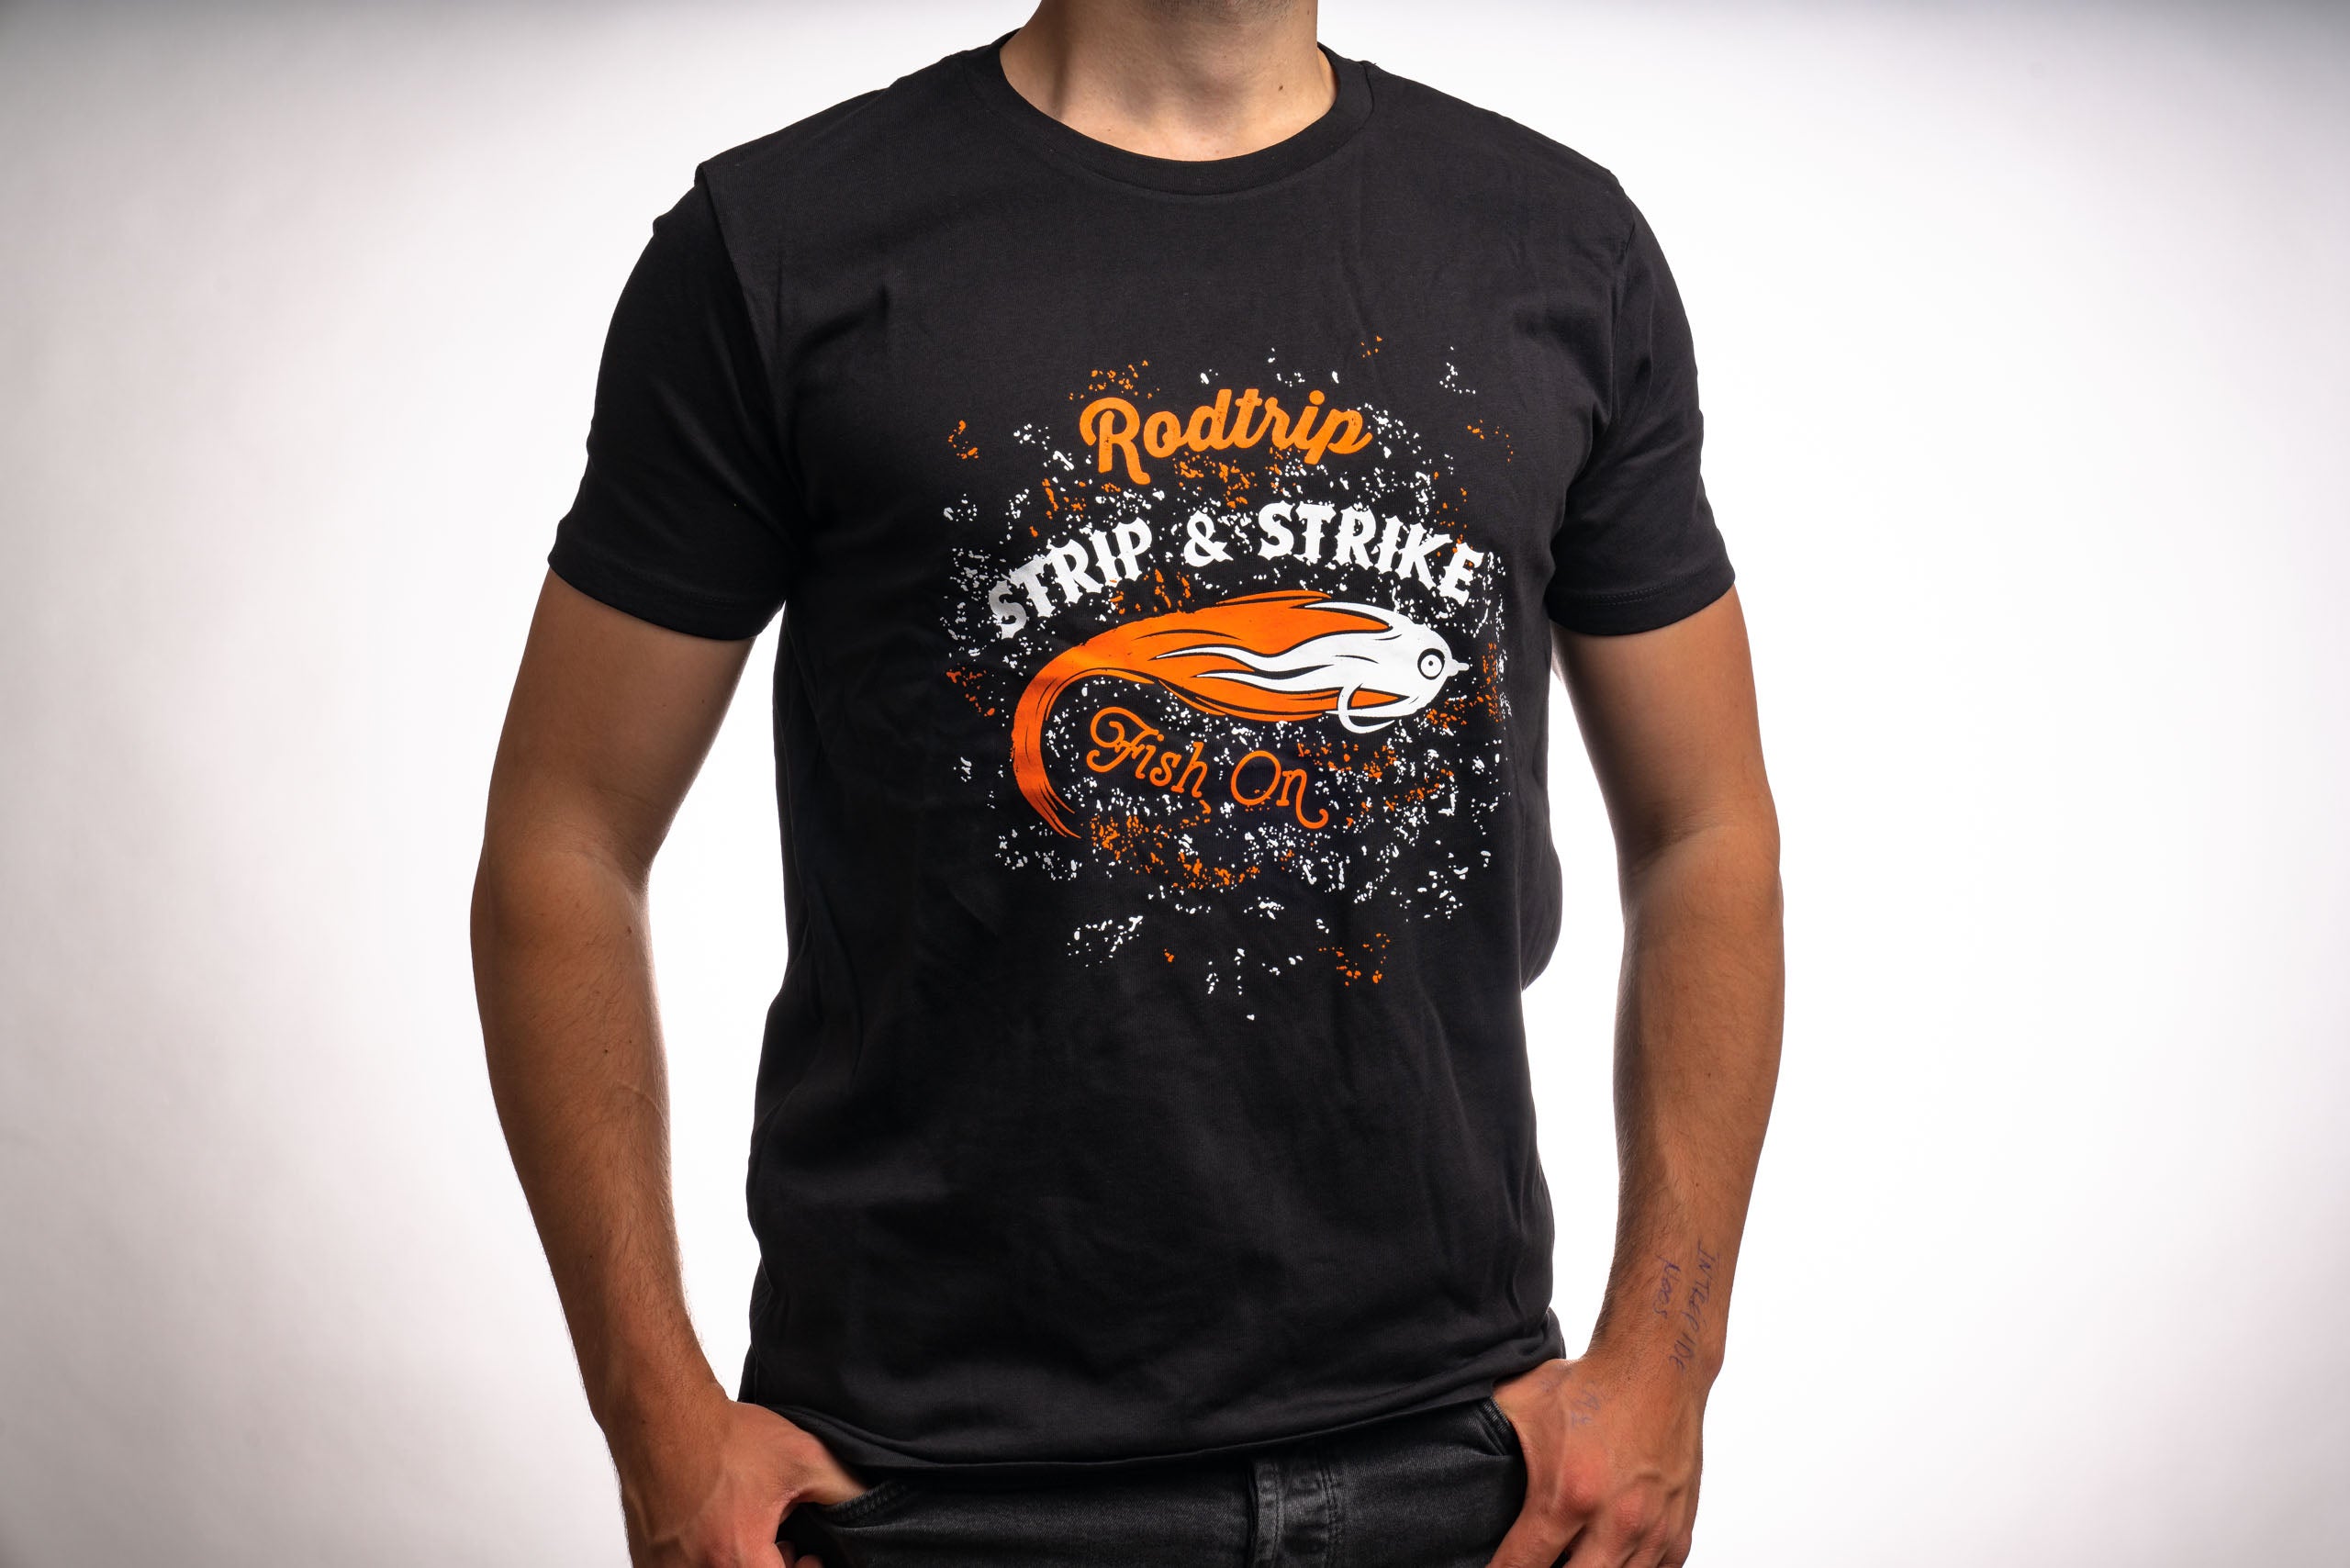 T-shirt strip & strike noir